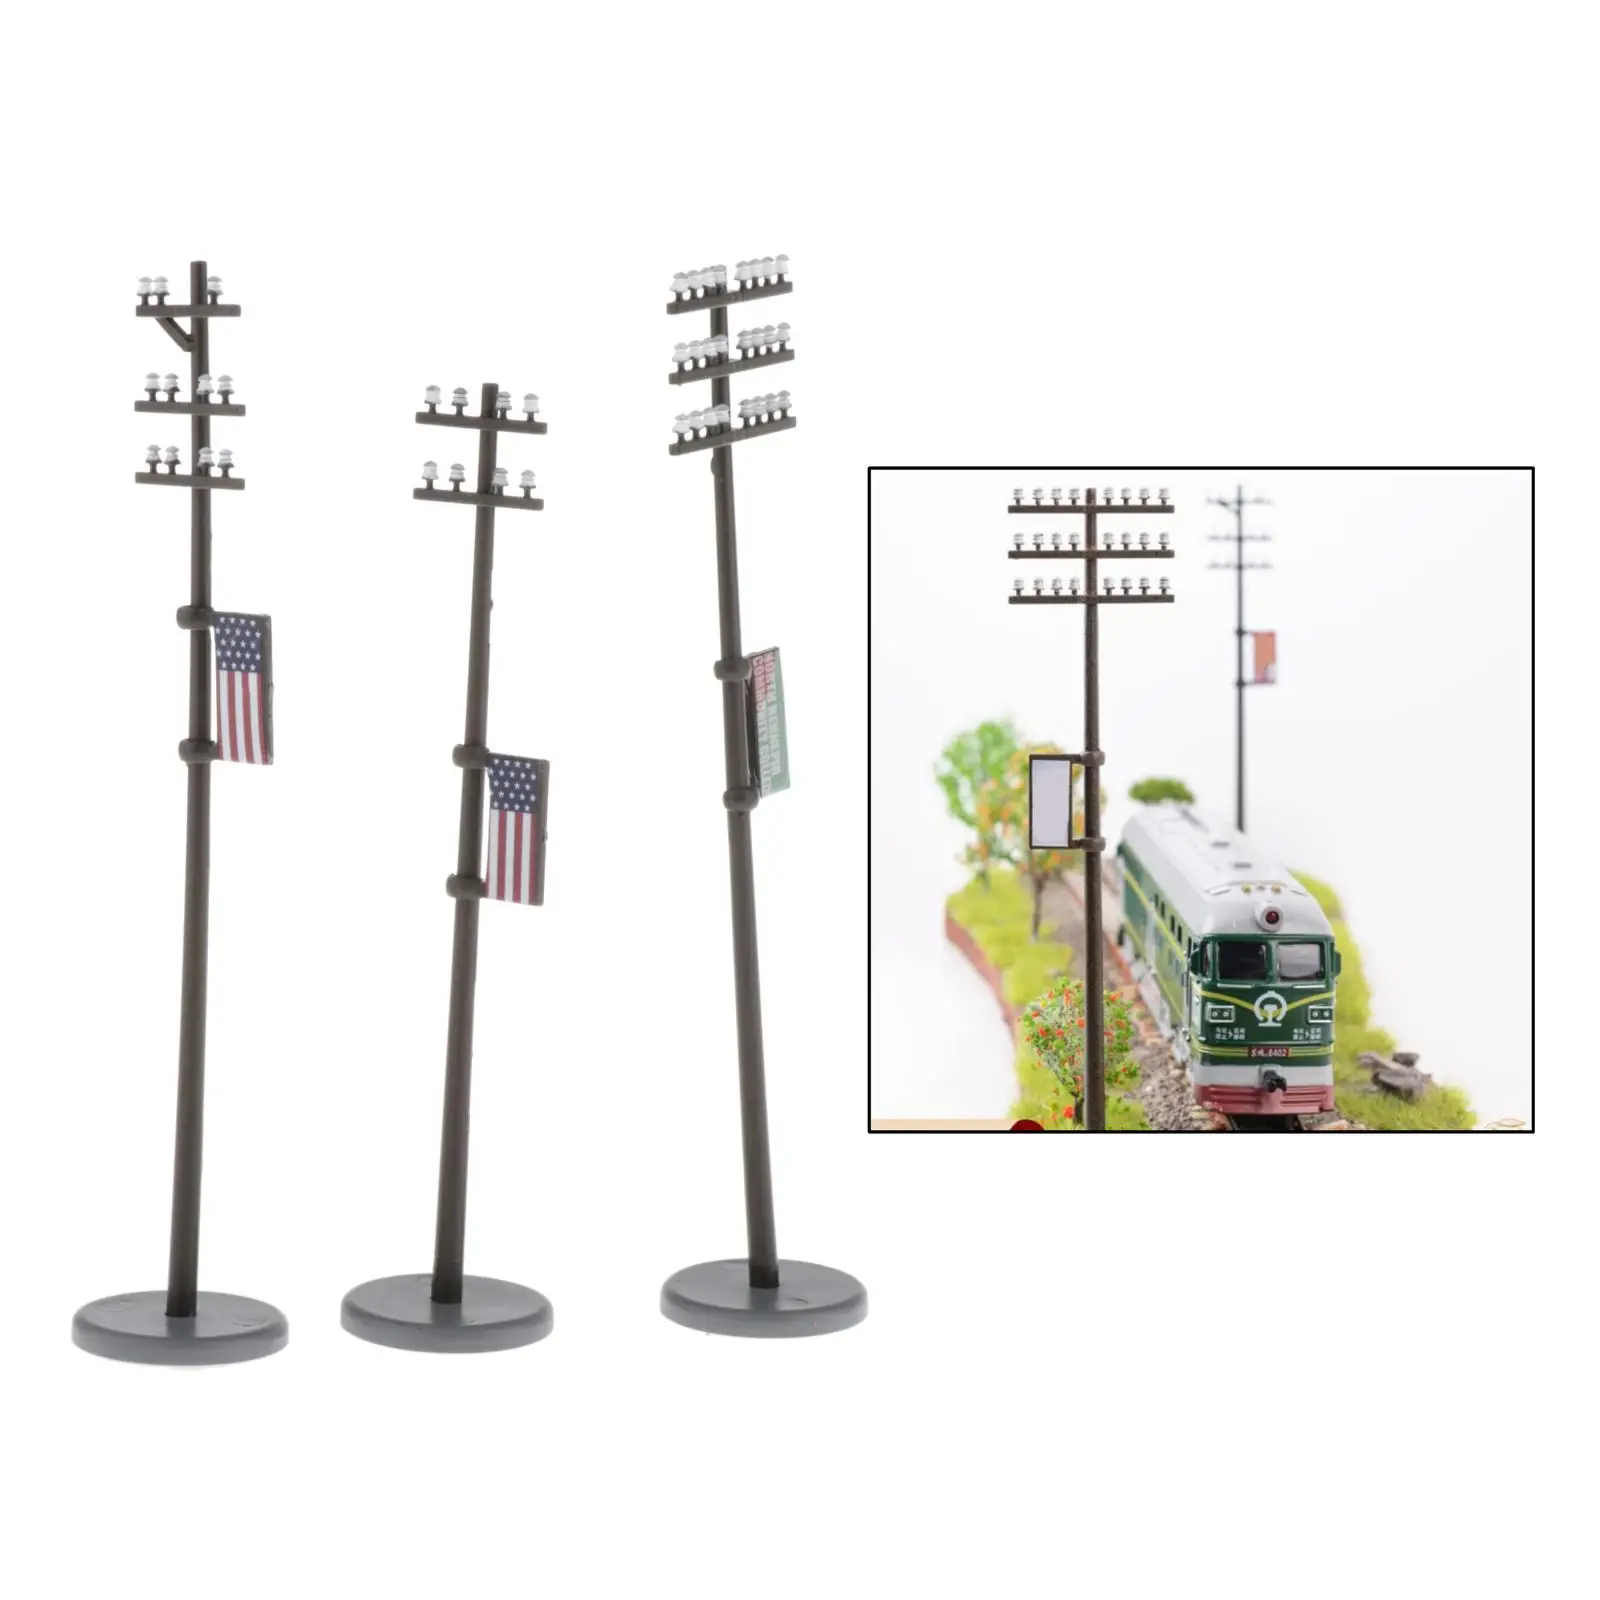 3 Pieces 1:42 Miniature Mini Telephone Poles for Train Architecture MISE